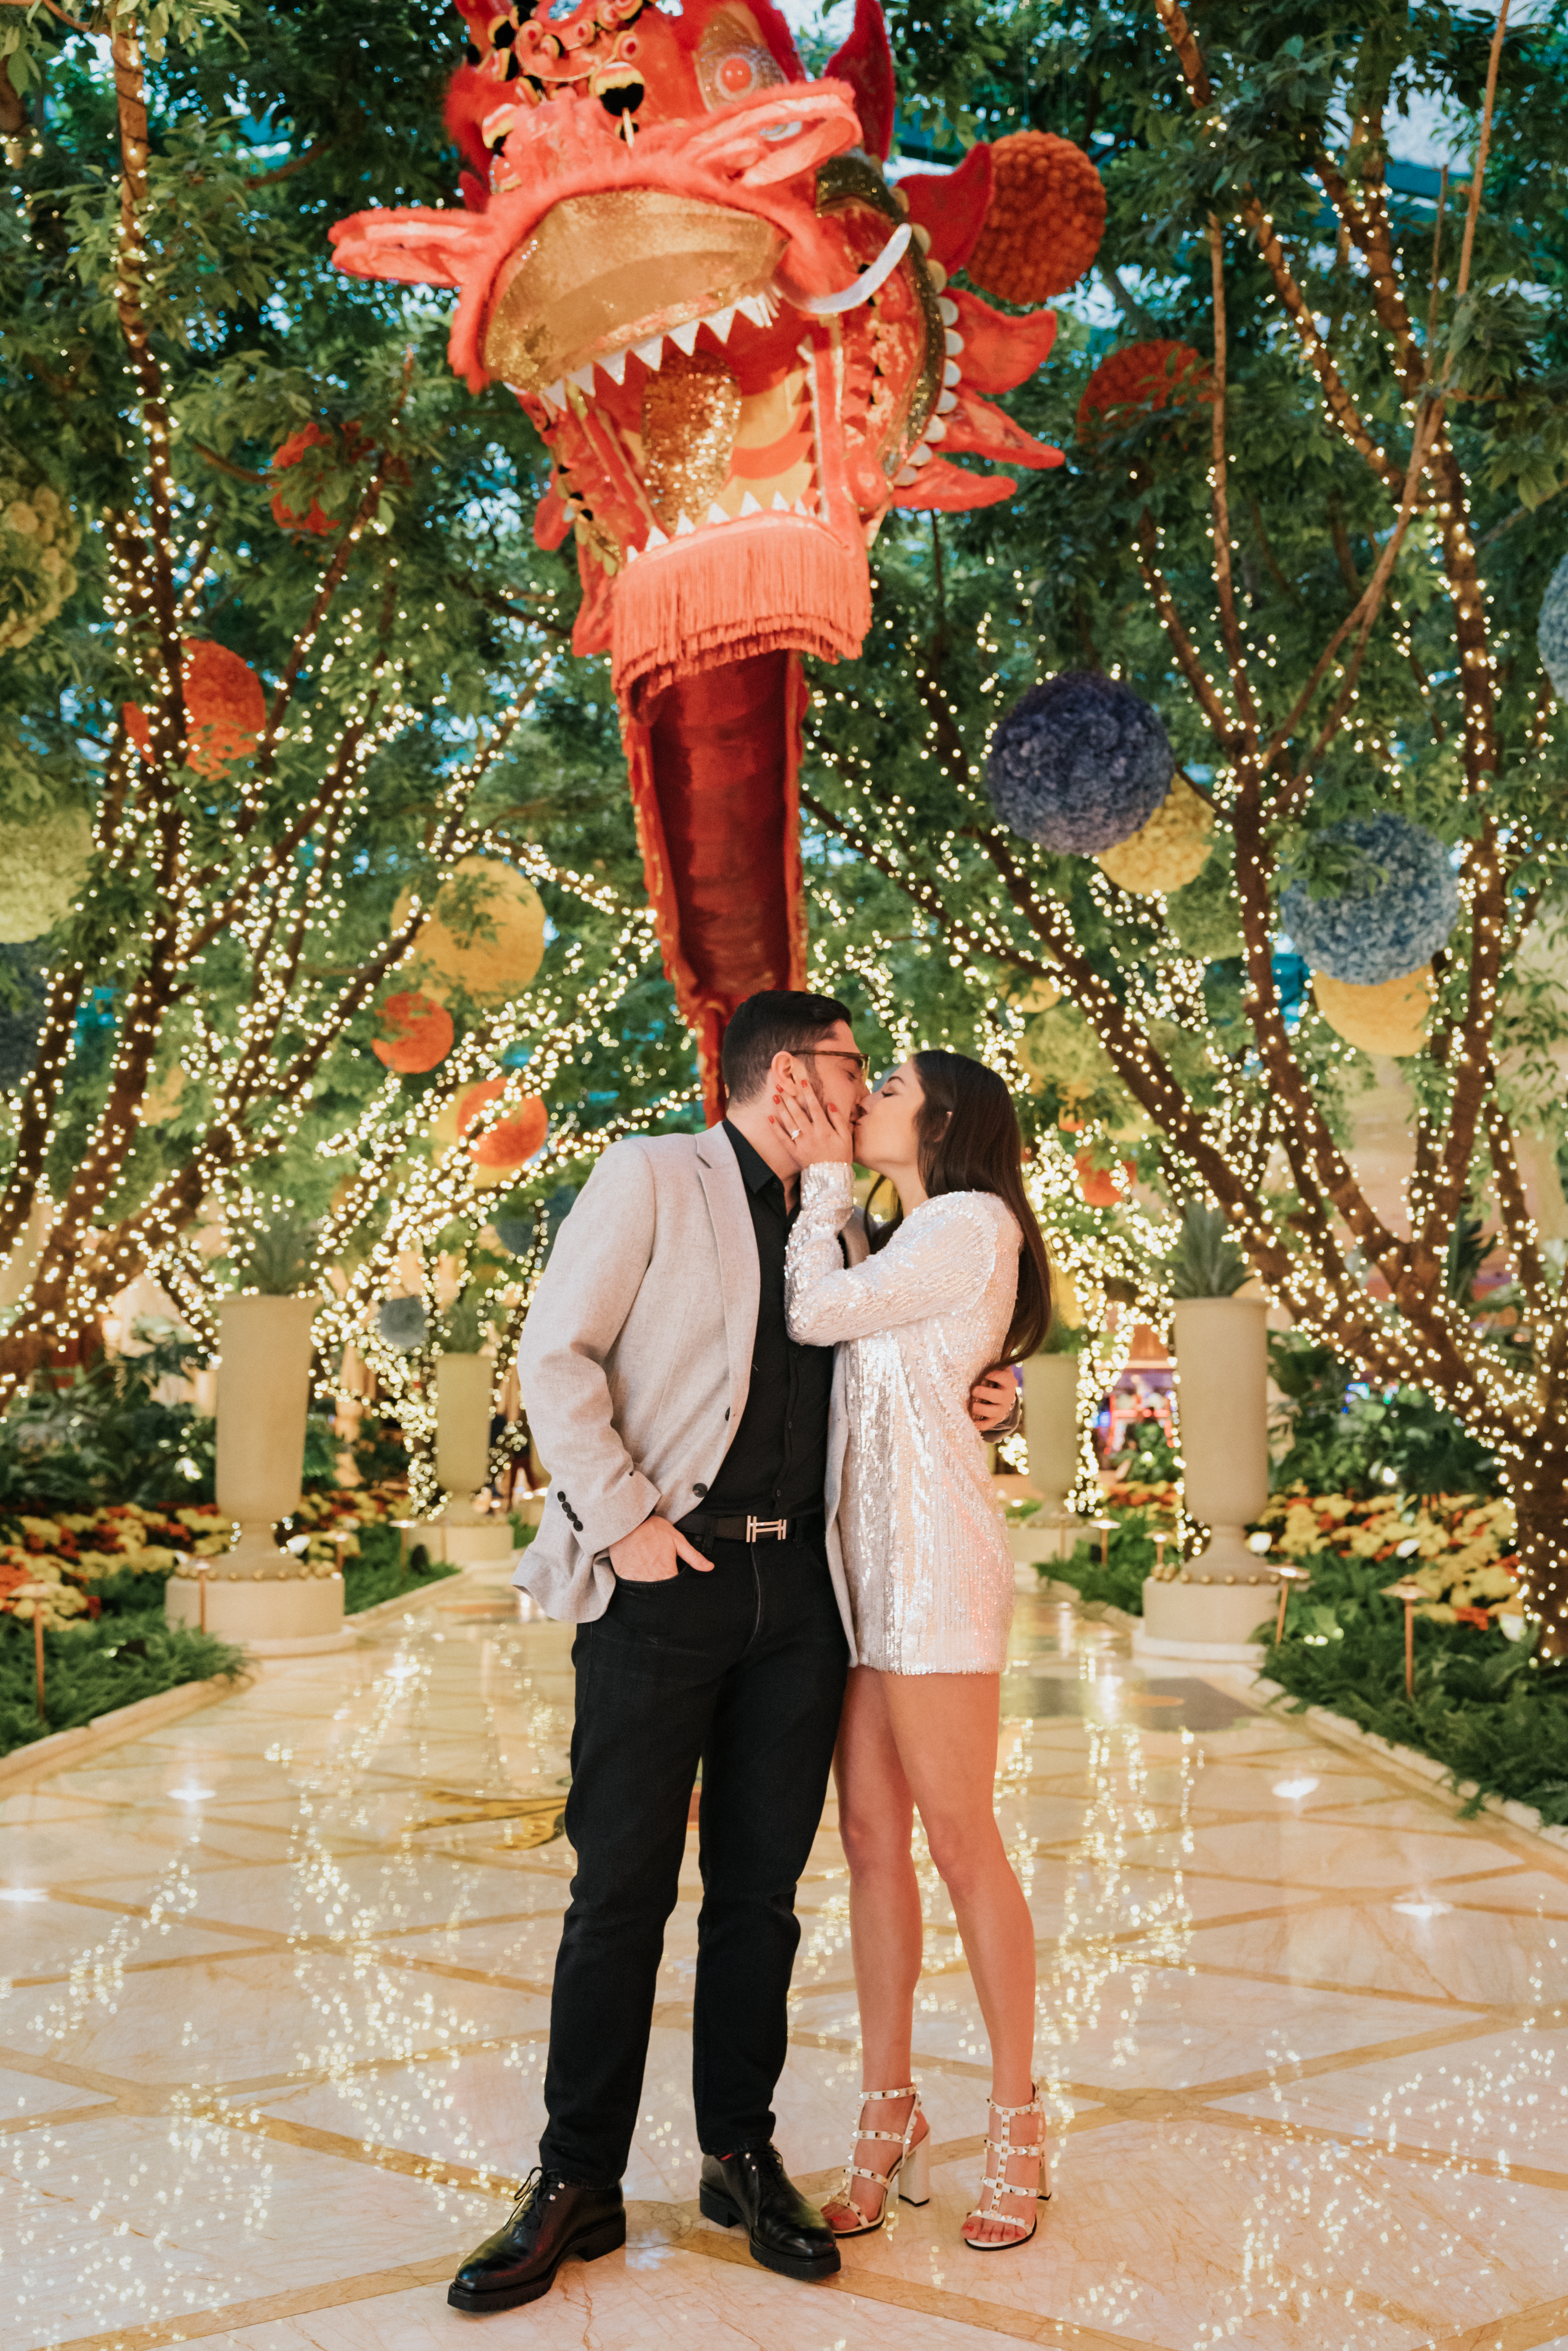 Valentines Day Surprise Proposal | The Wynn, Las Vegas